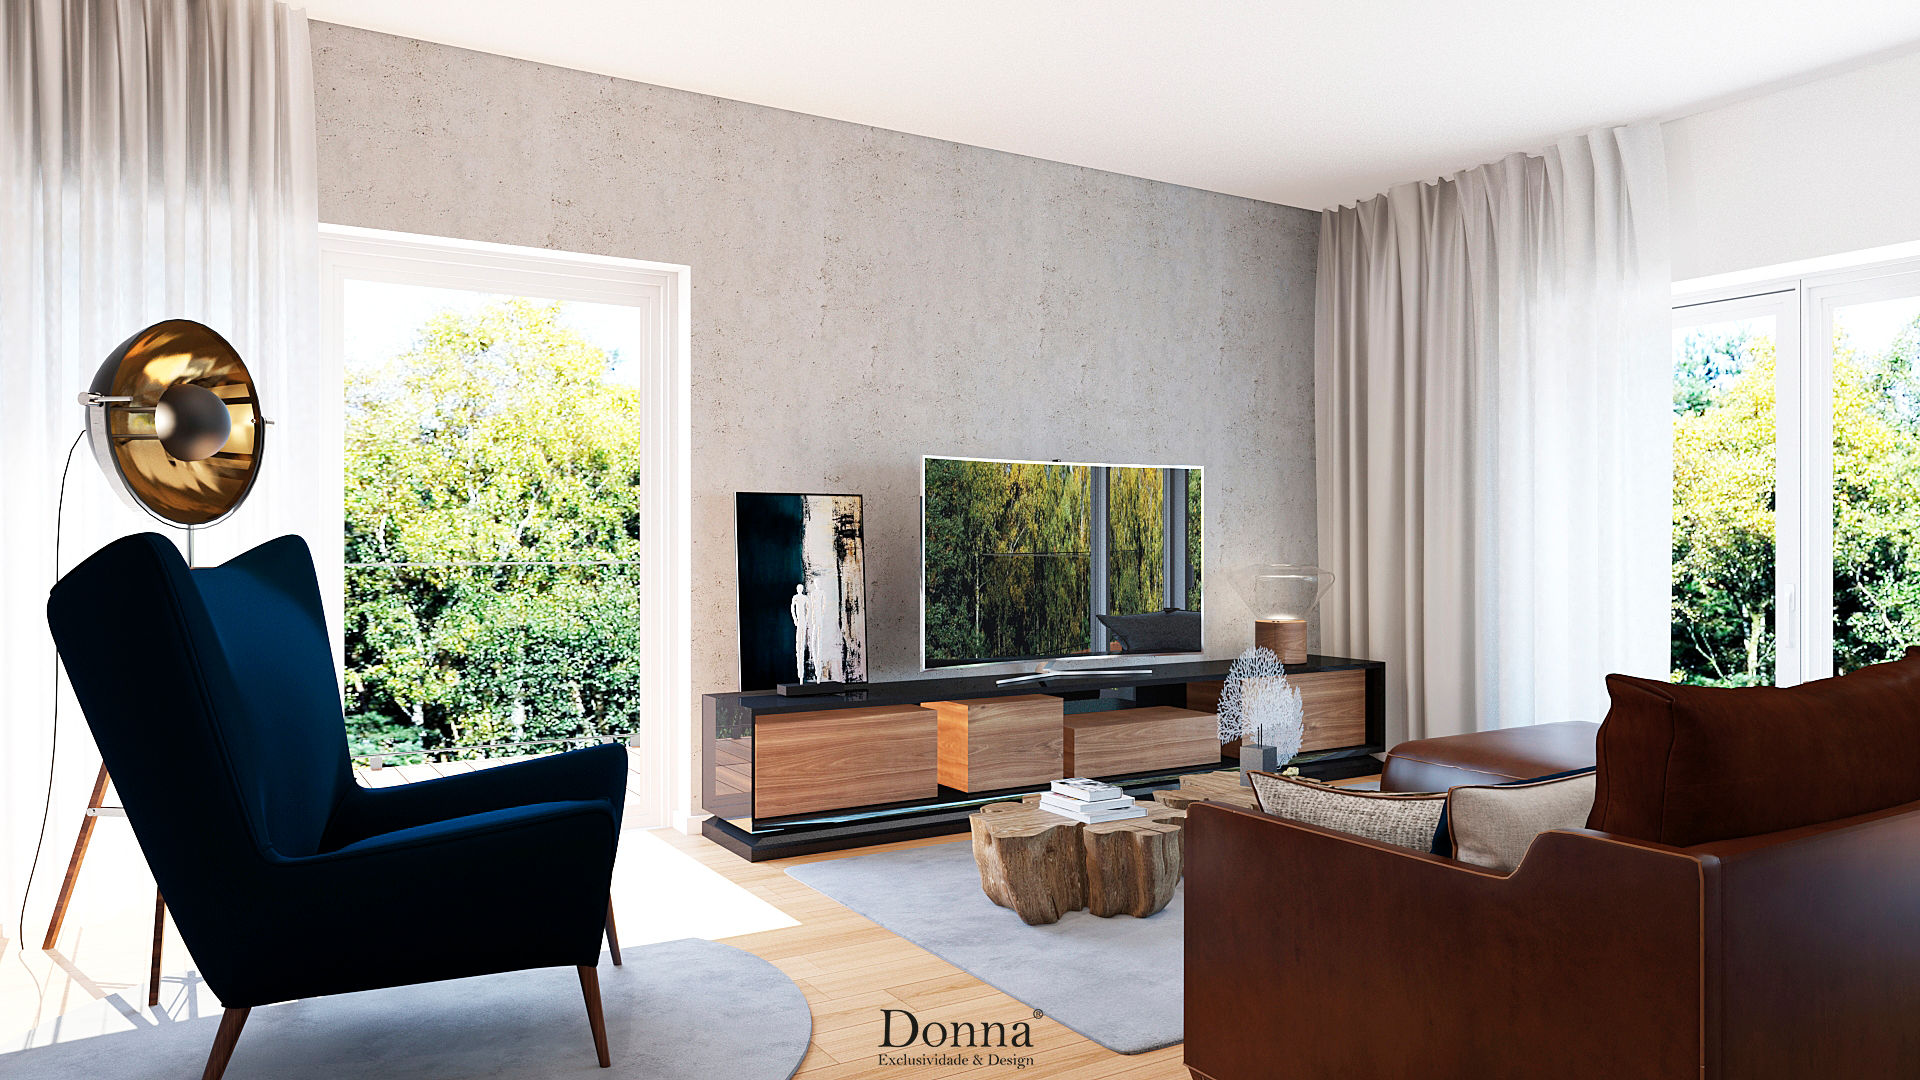 Apartamento Lisboa , Donna - Exclusividade e Design Donna - Exclusividade e Design Industrial style living room